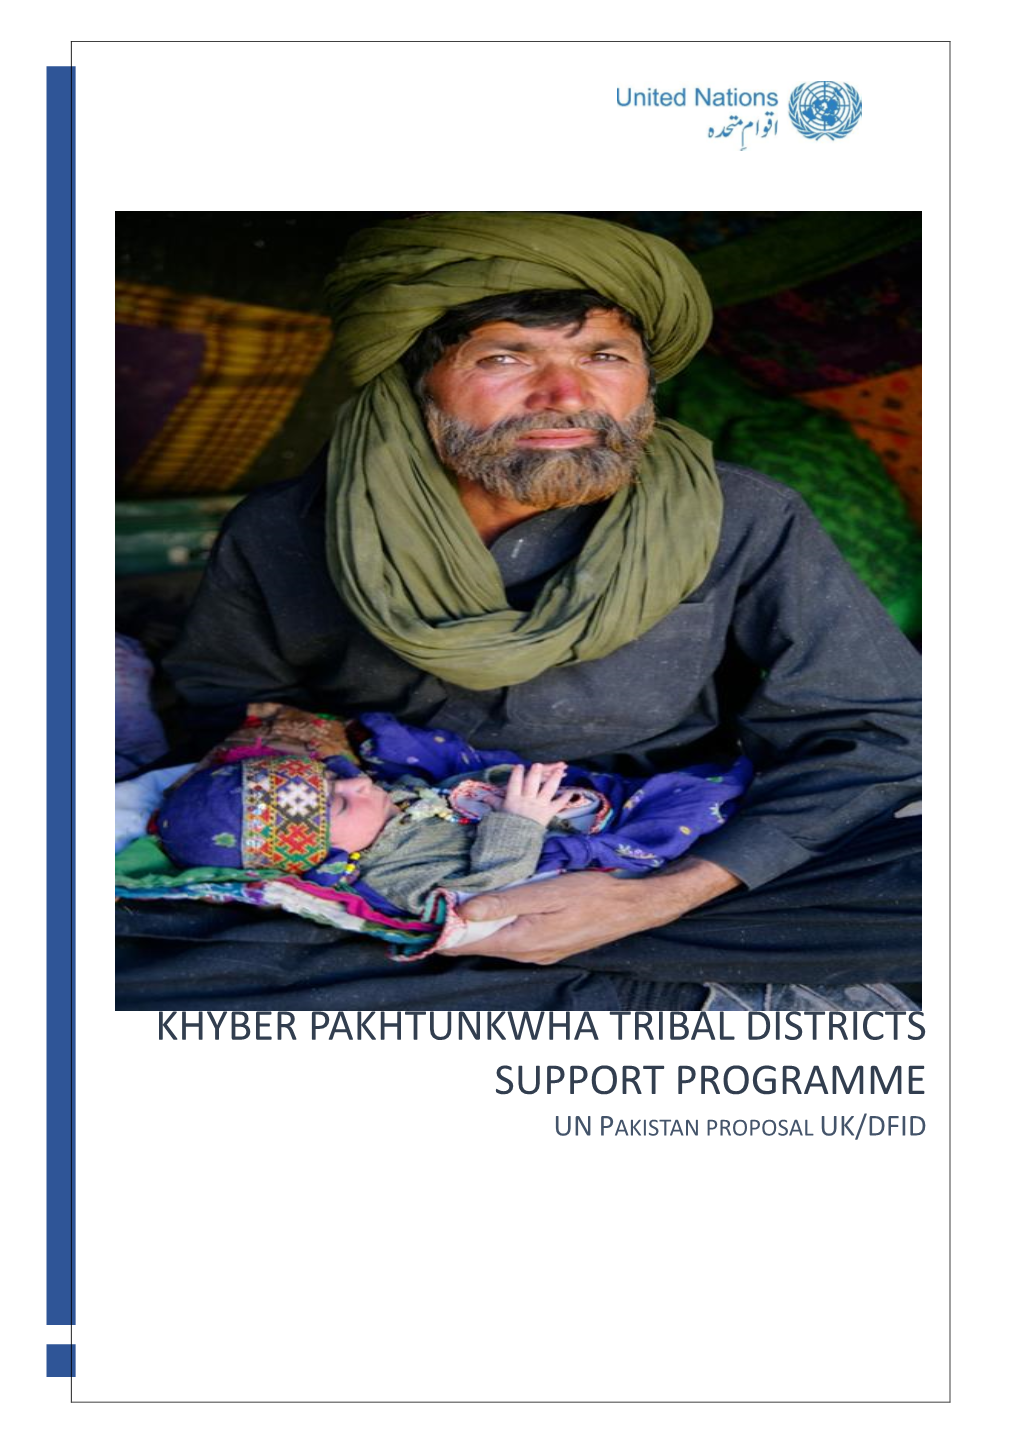 Khyber Pakhtunkwha Tribal Districts Support Programme Un Pakistan Proposal Uk/Dfid